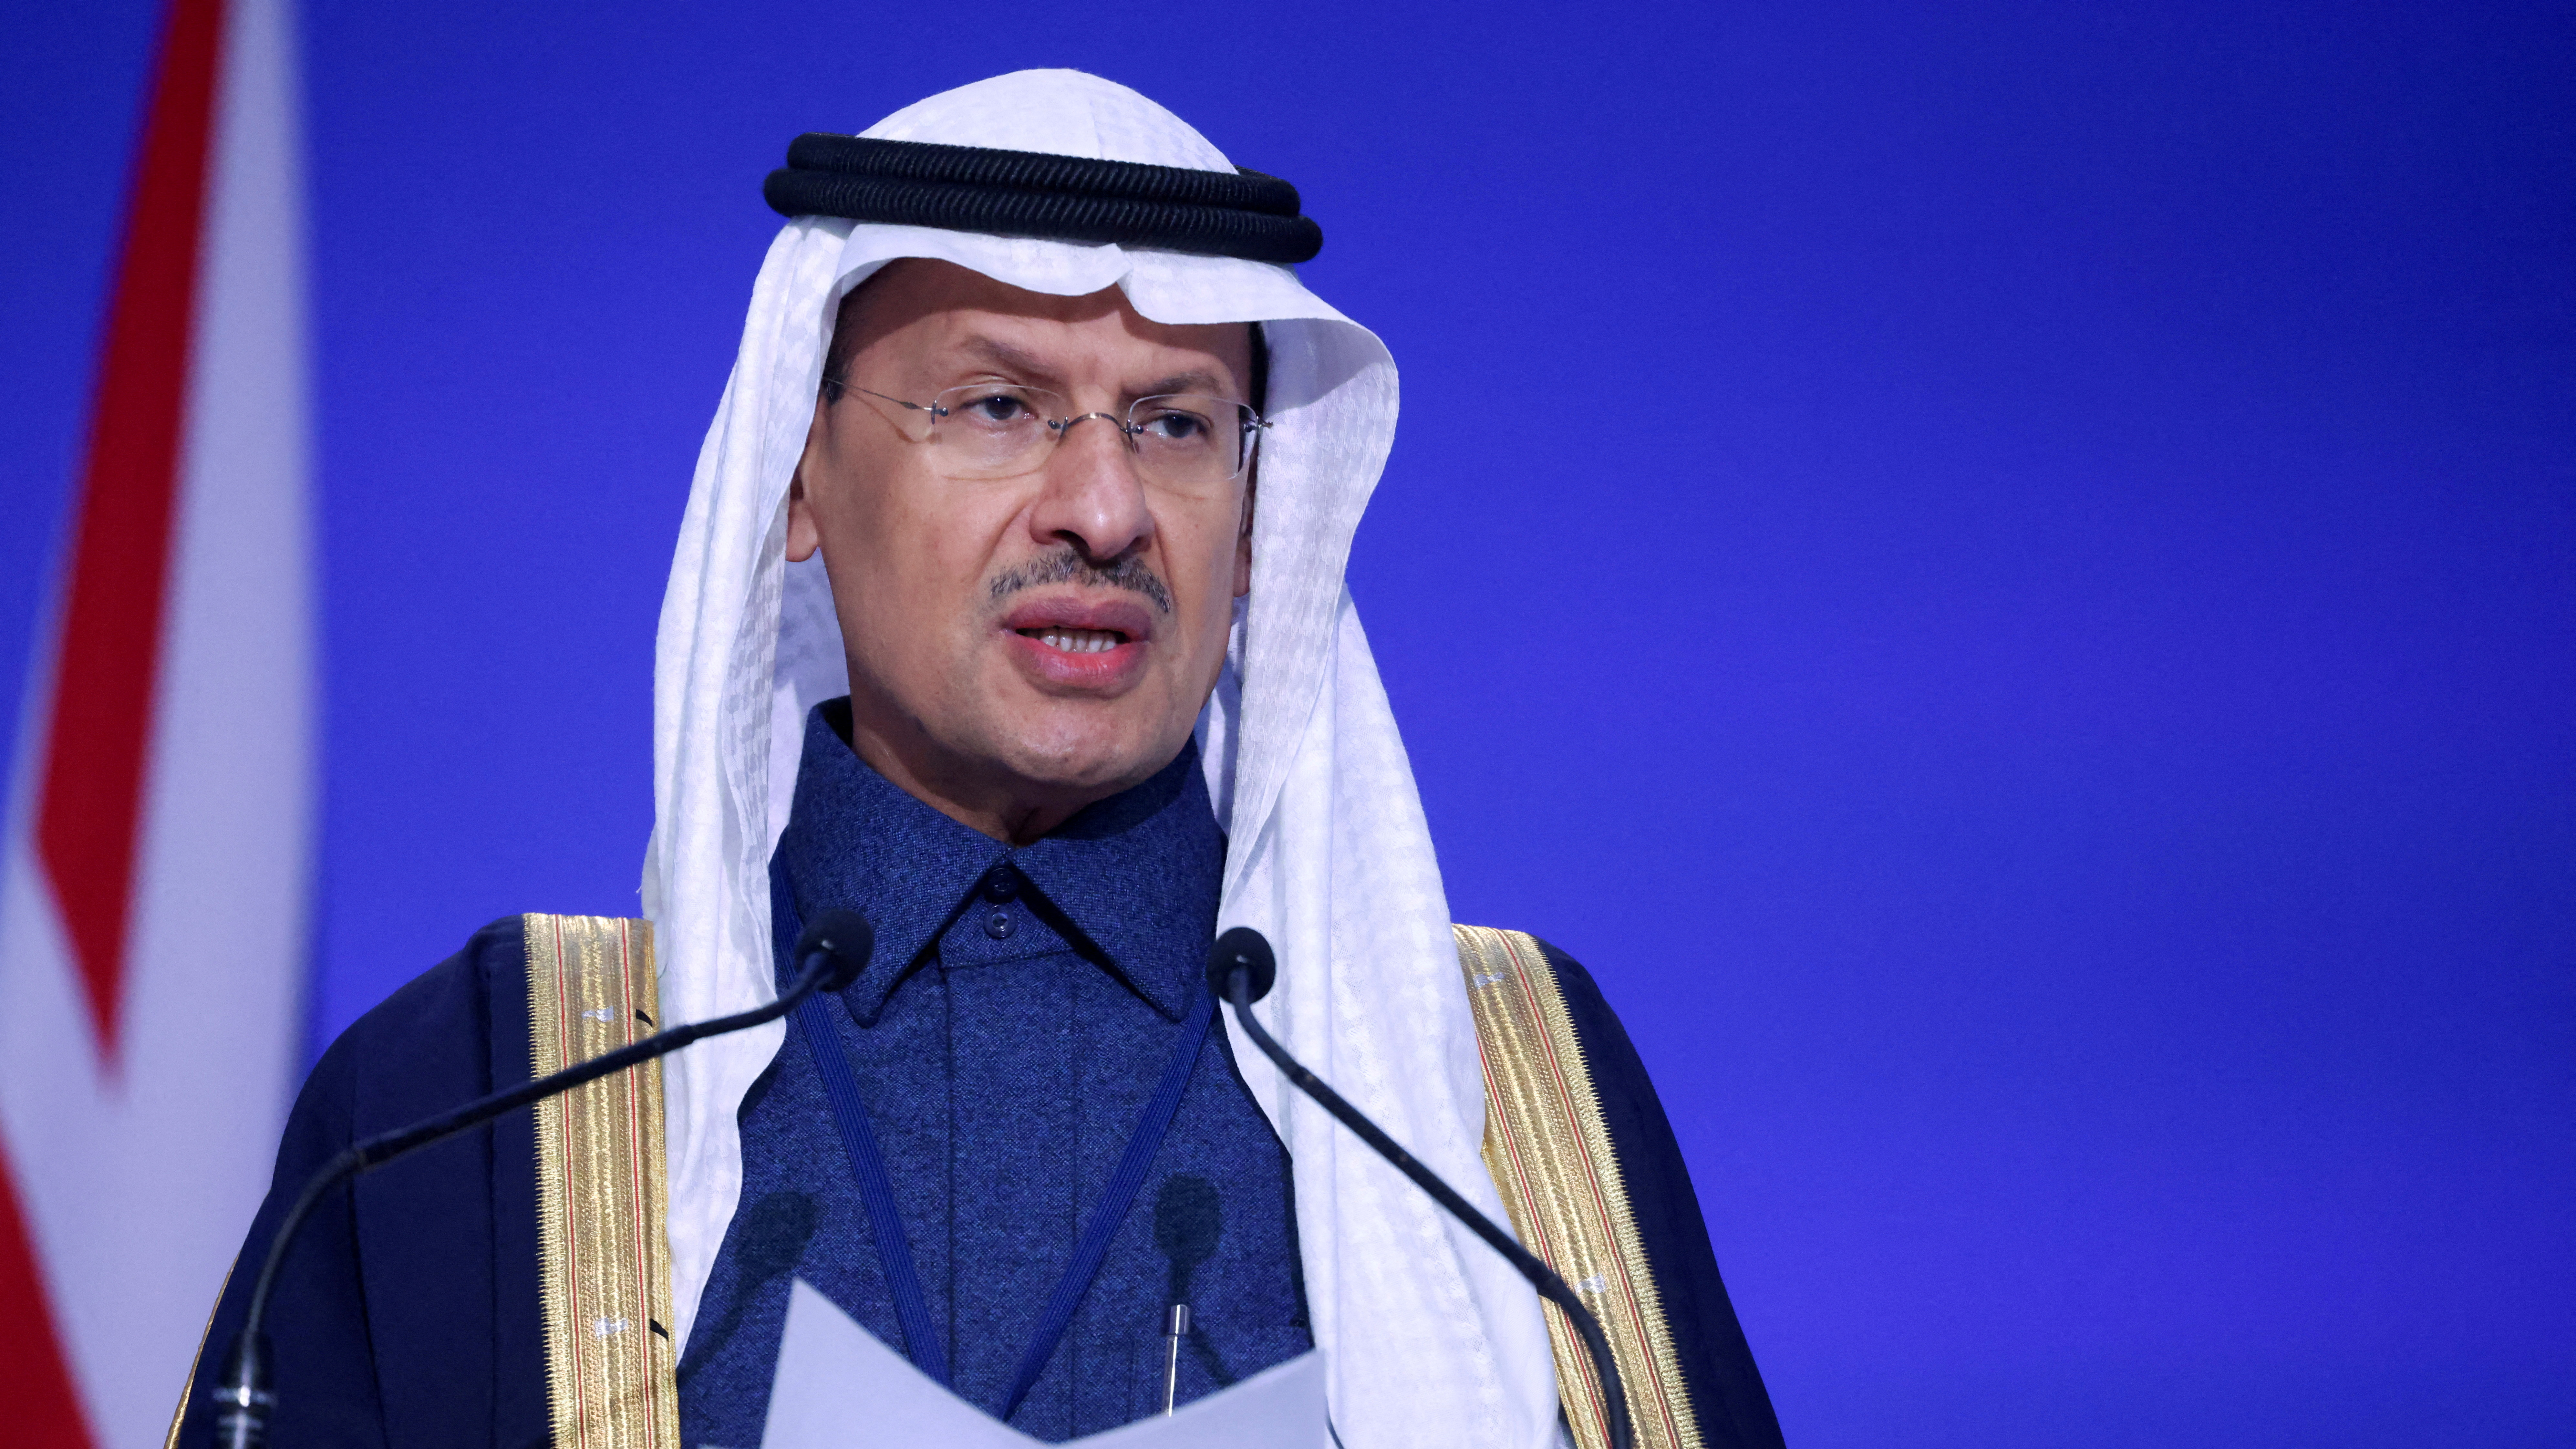 Saudi Energy Minister Prince Abdulaziz bin Salman al-Saud speaks during the UN Climate Change Conference